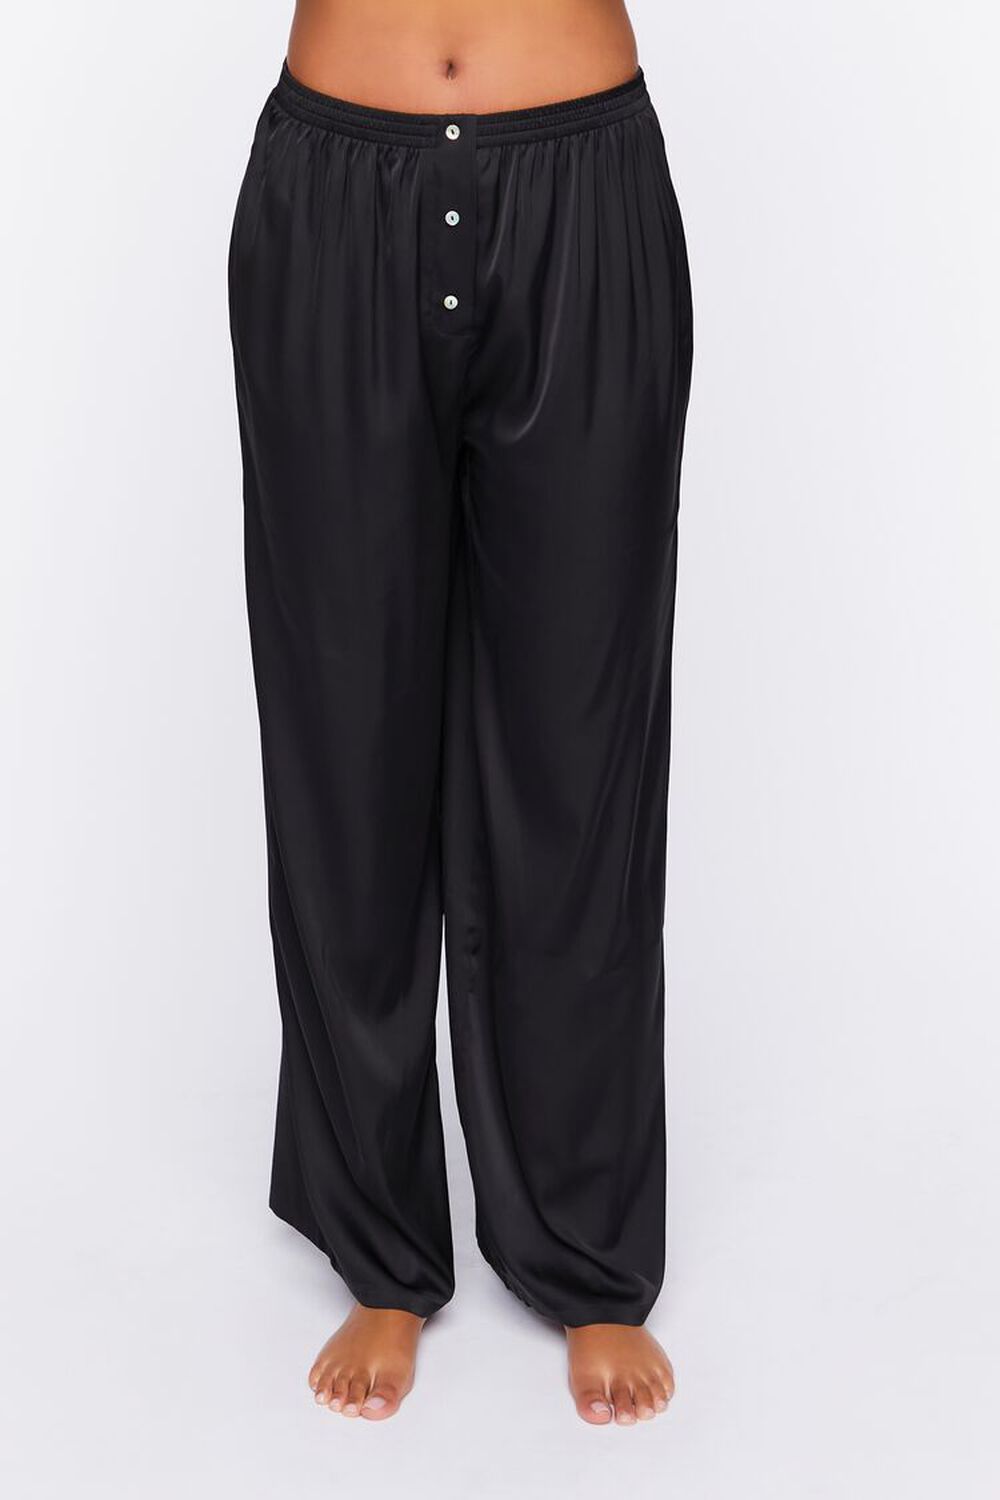 BLACK Satin Mid-Rise Pajama Pants, image 2